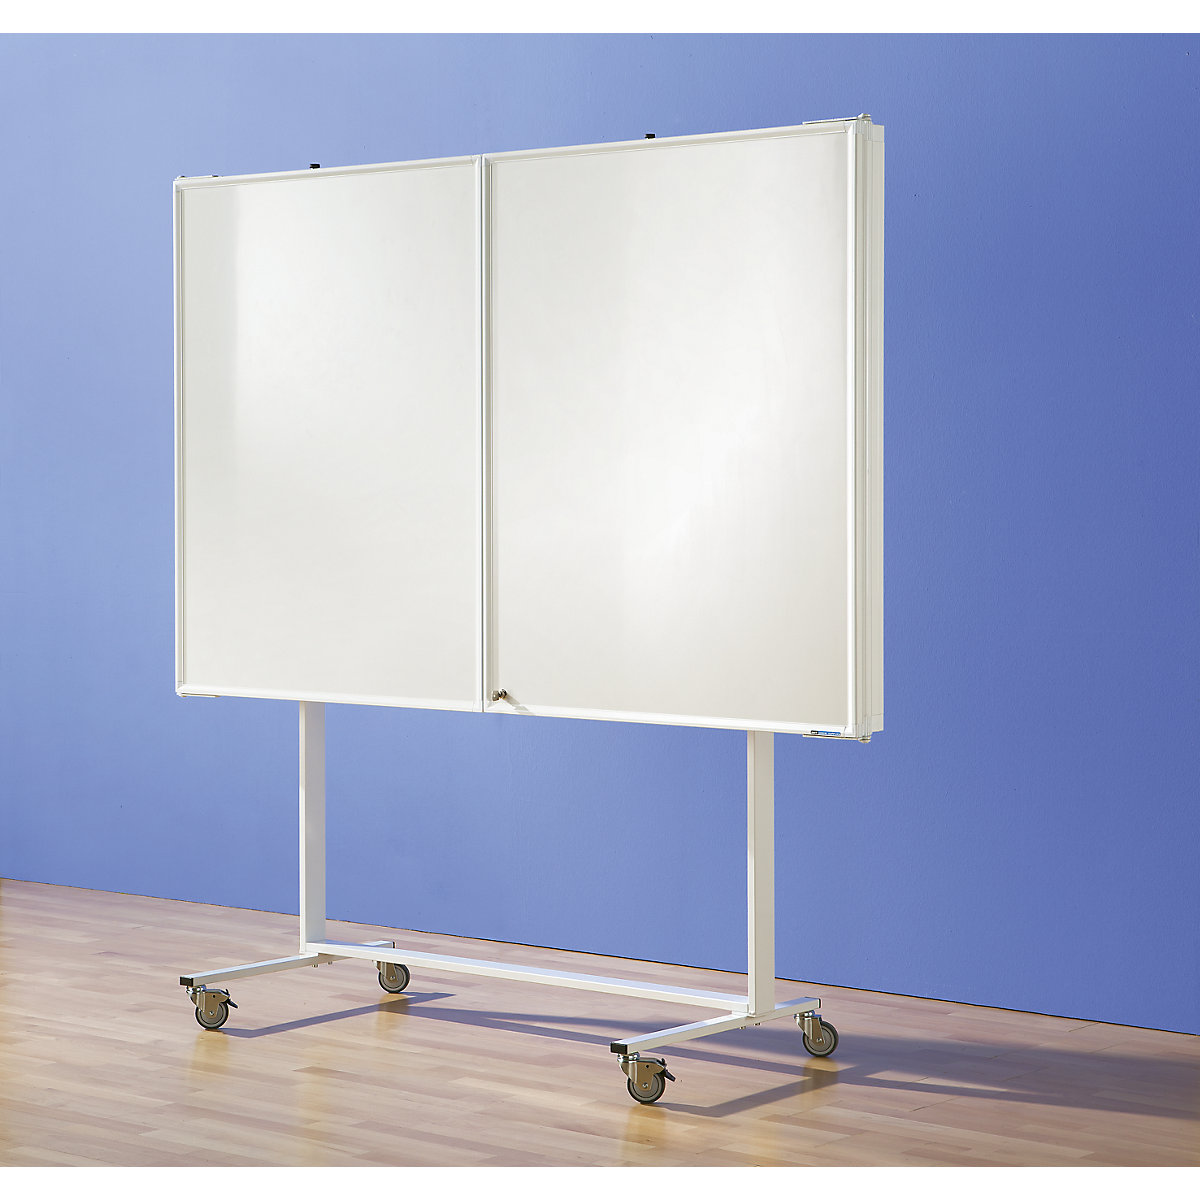 Panou whiteboard rabatabil, set complet (Imagine produs 5)